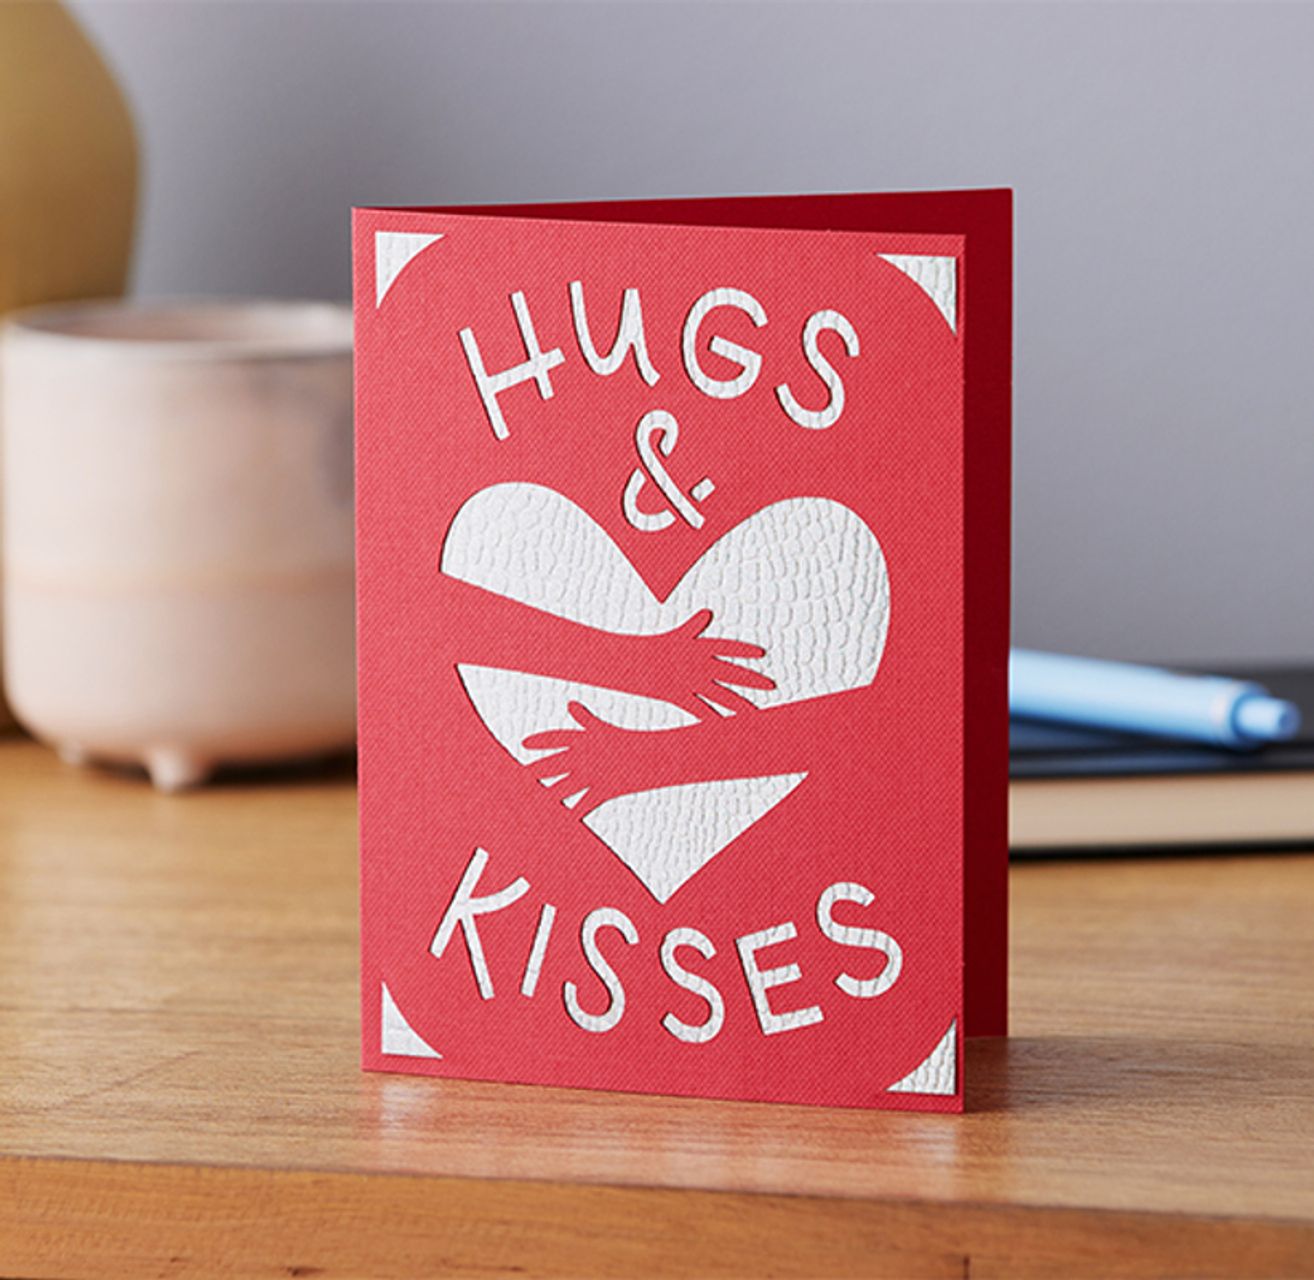 Hugs and kisses card